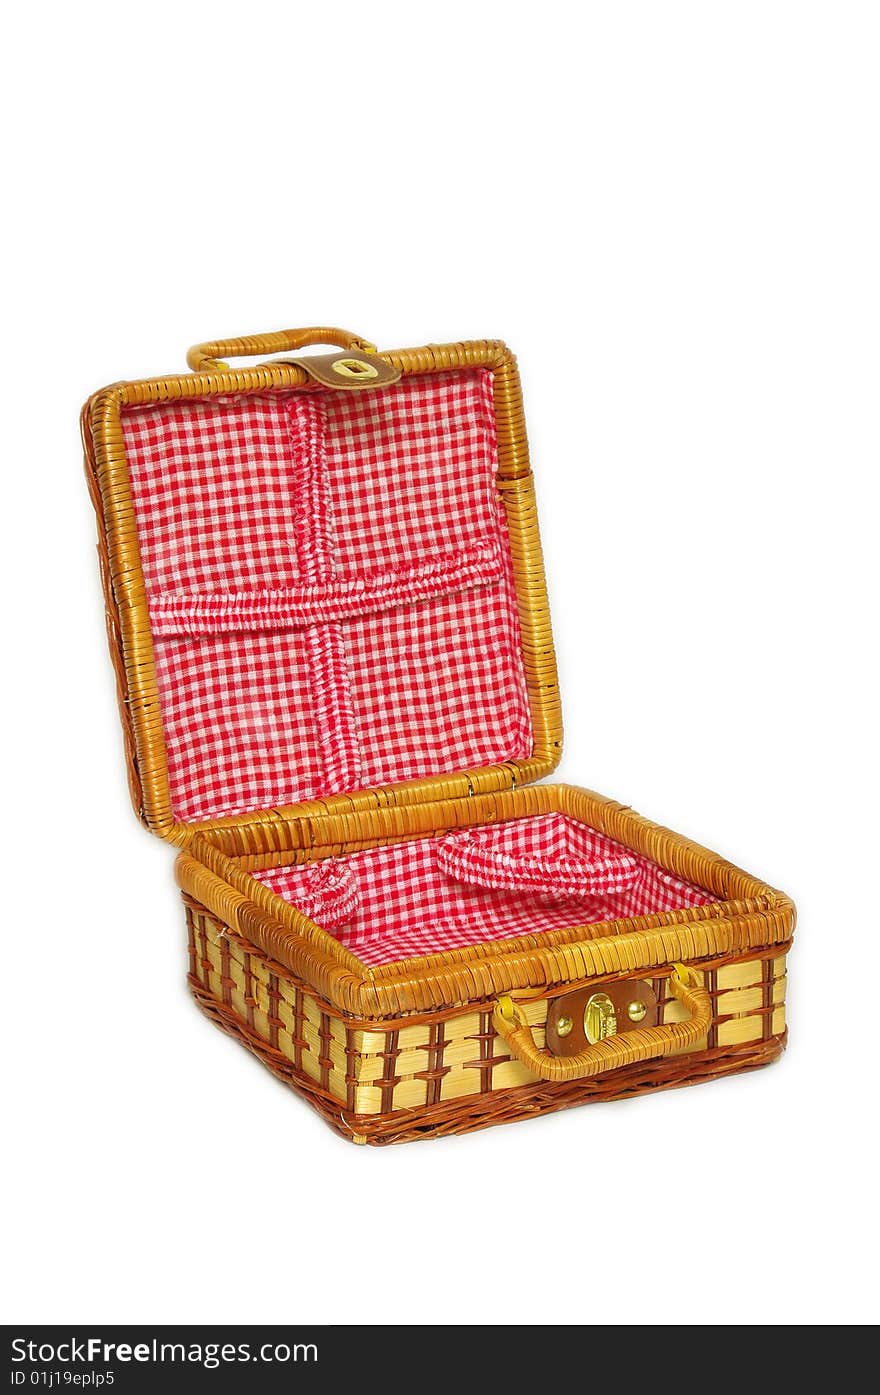 A wicker picnic handbasket for picnic needs